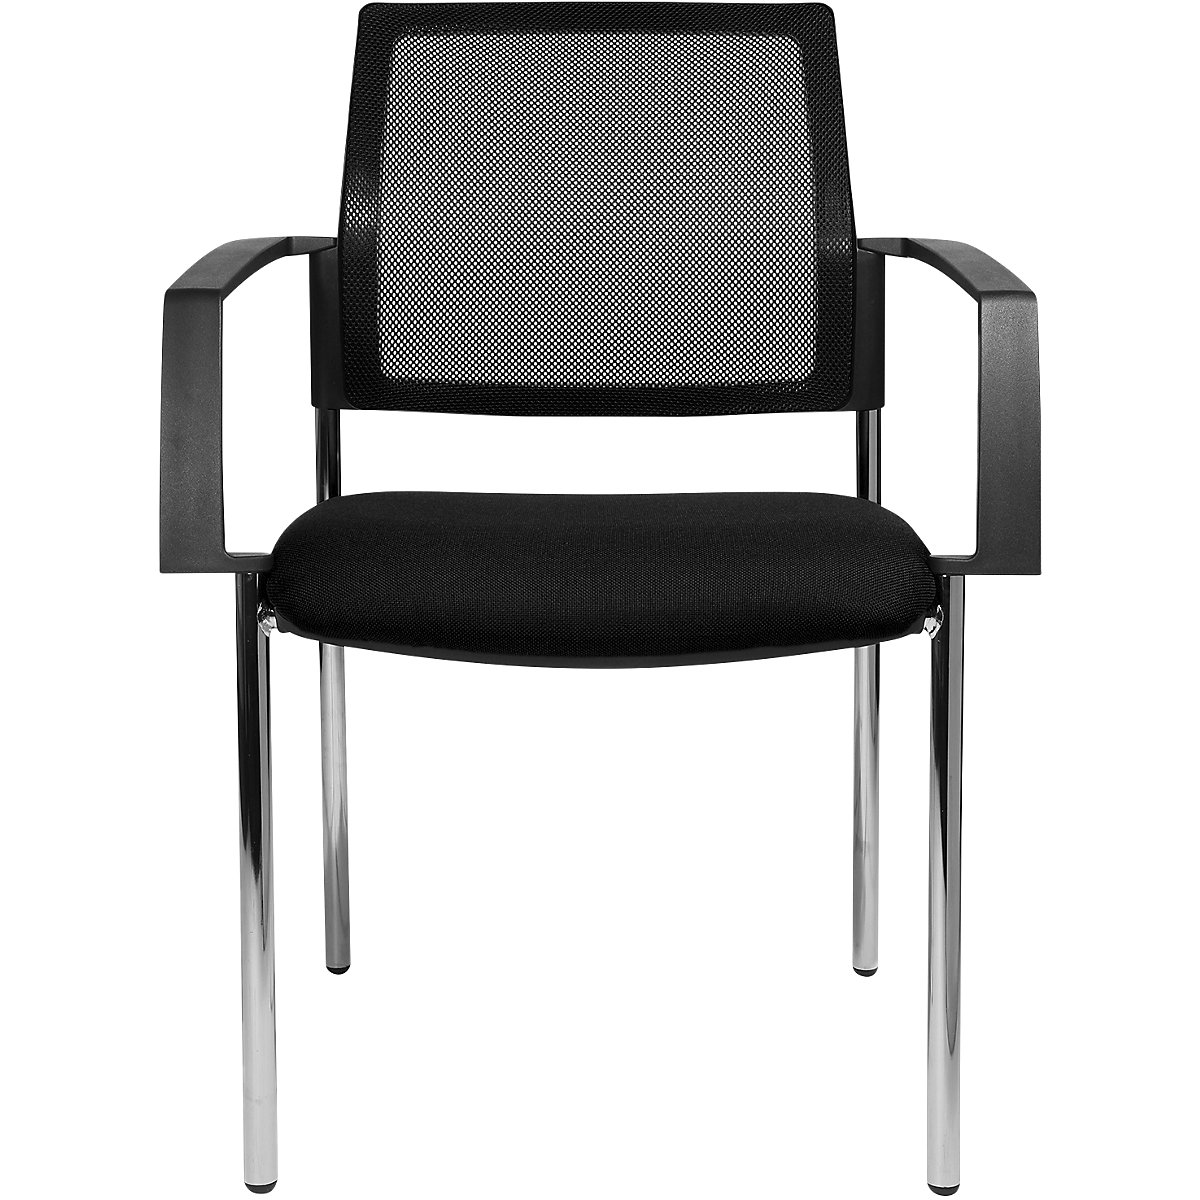 Mesh stacking chair – Topstar, 4-leg, pack of 2, black seat, chrome frame-8